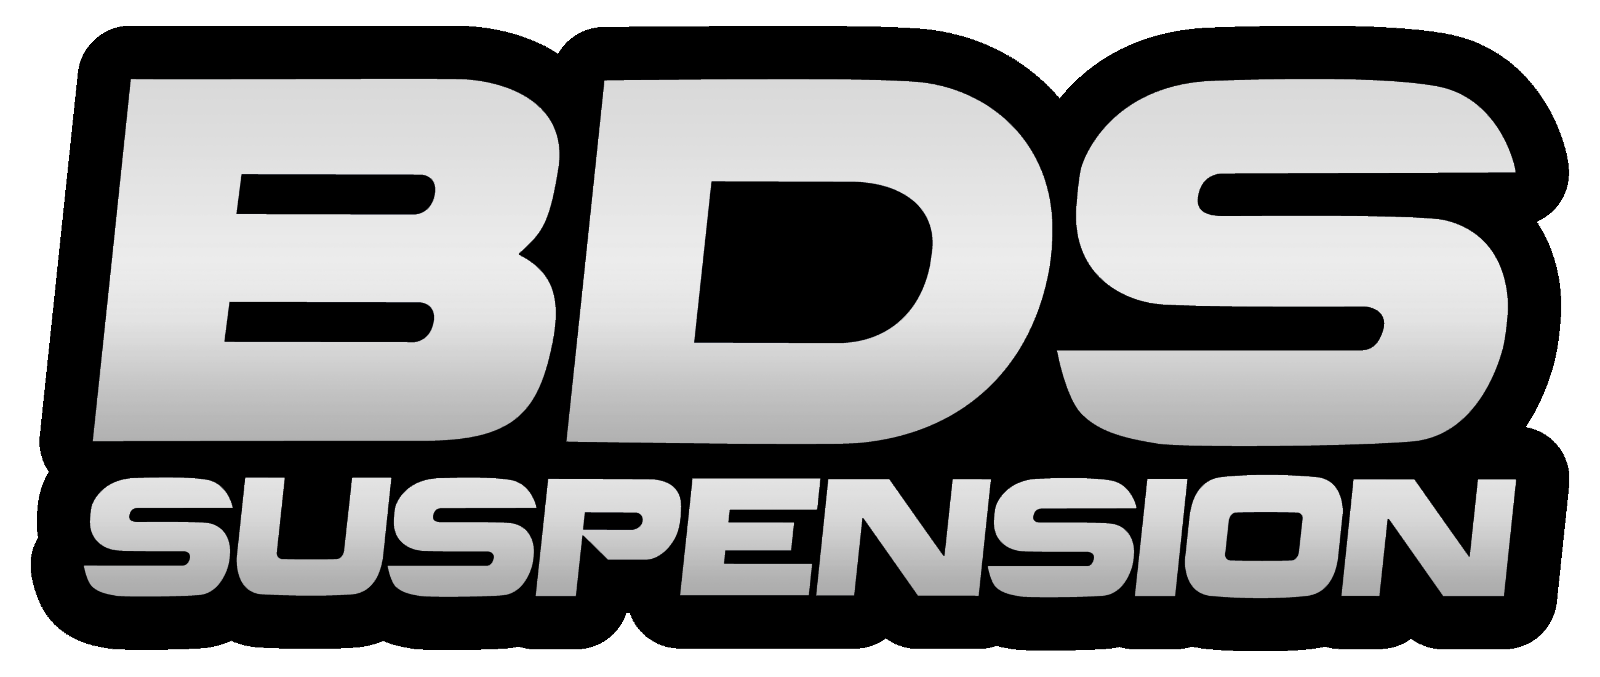 BDS BDS181H 4.5 Inch Lift Kit - Chevy Silverado or GMC Sierra 1500 (99-06) 4WD